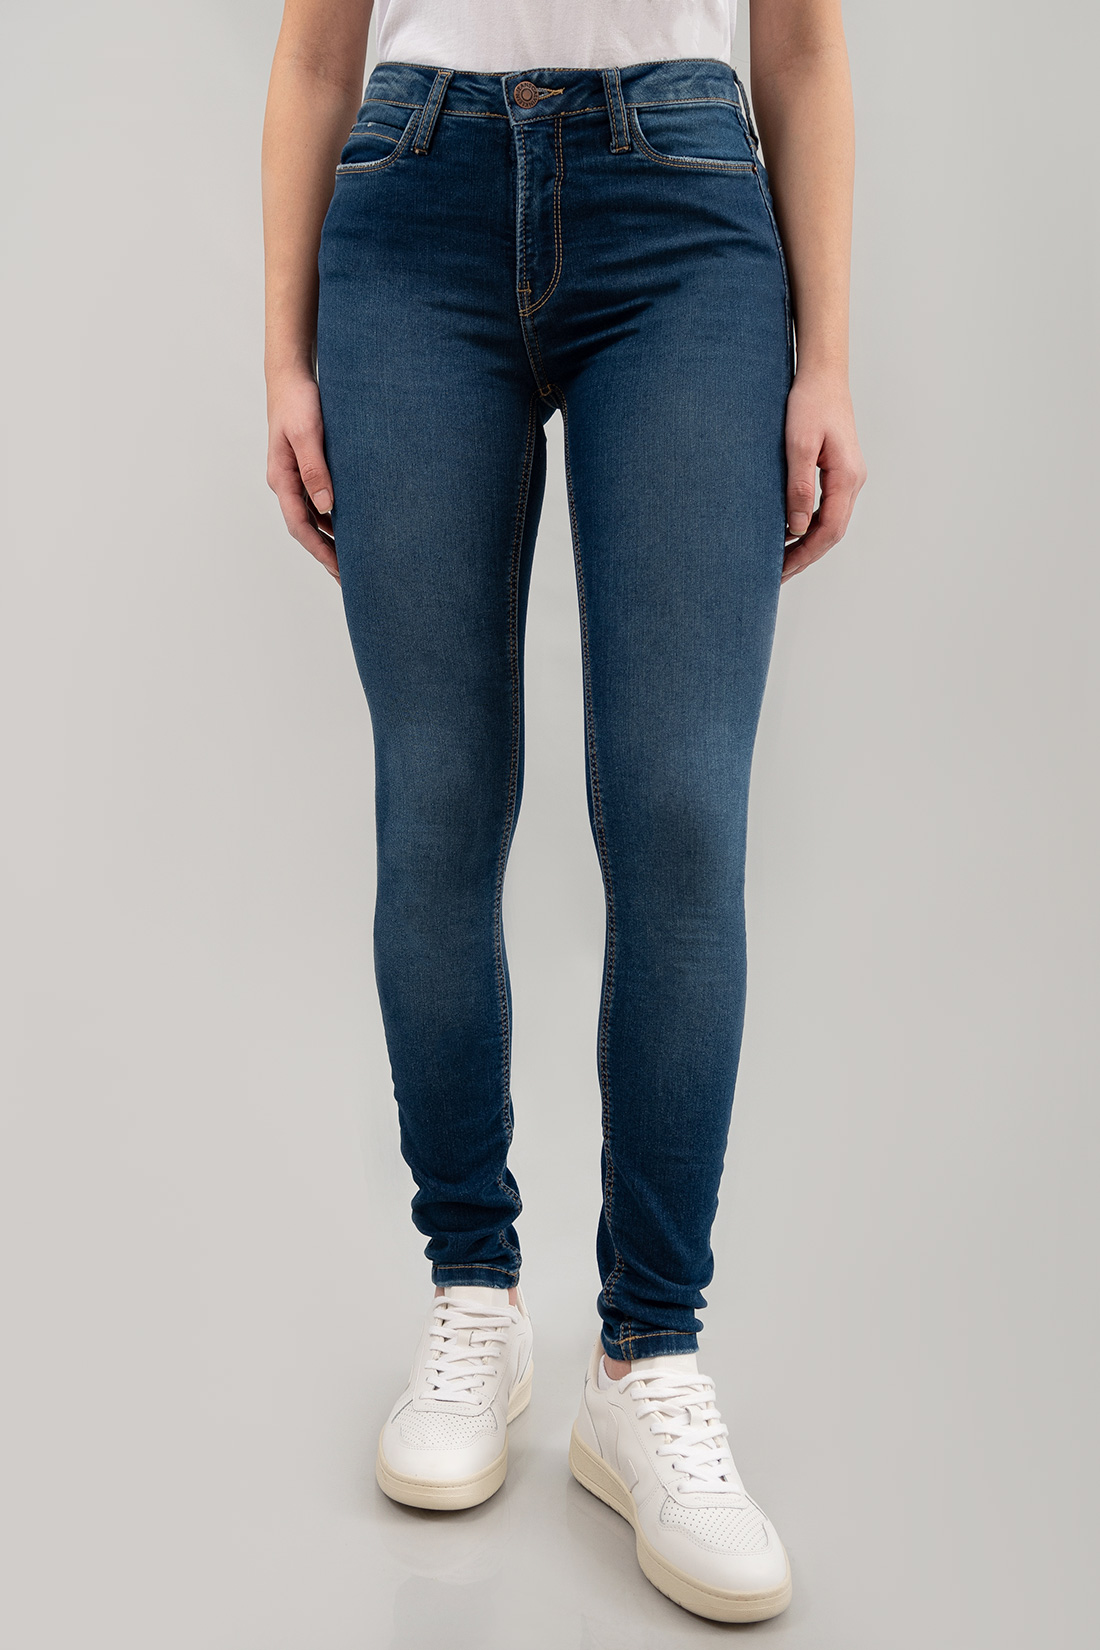 Calca Jeans Calvin Klein Super Skinny